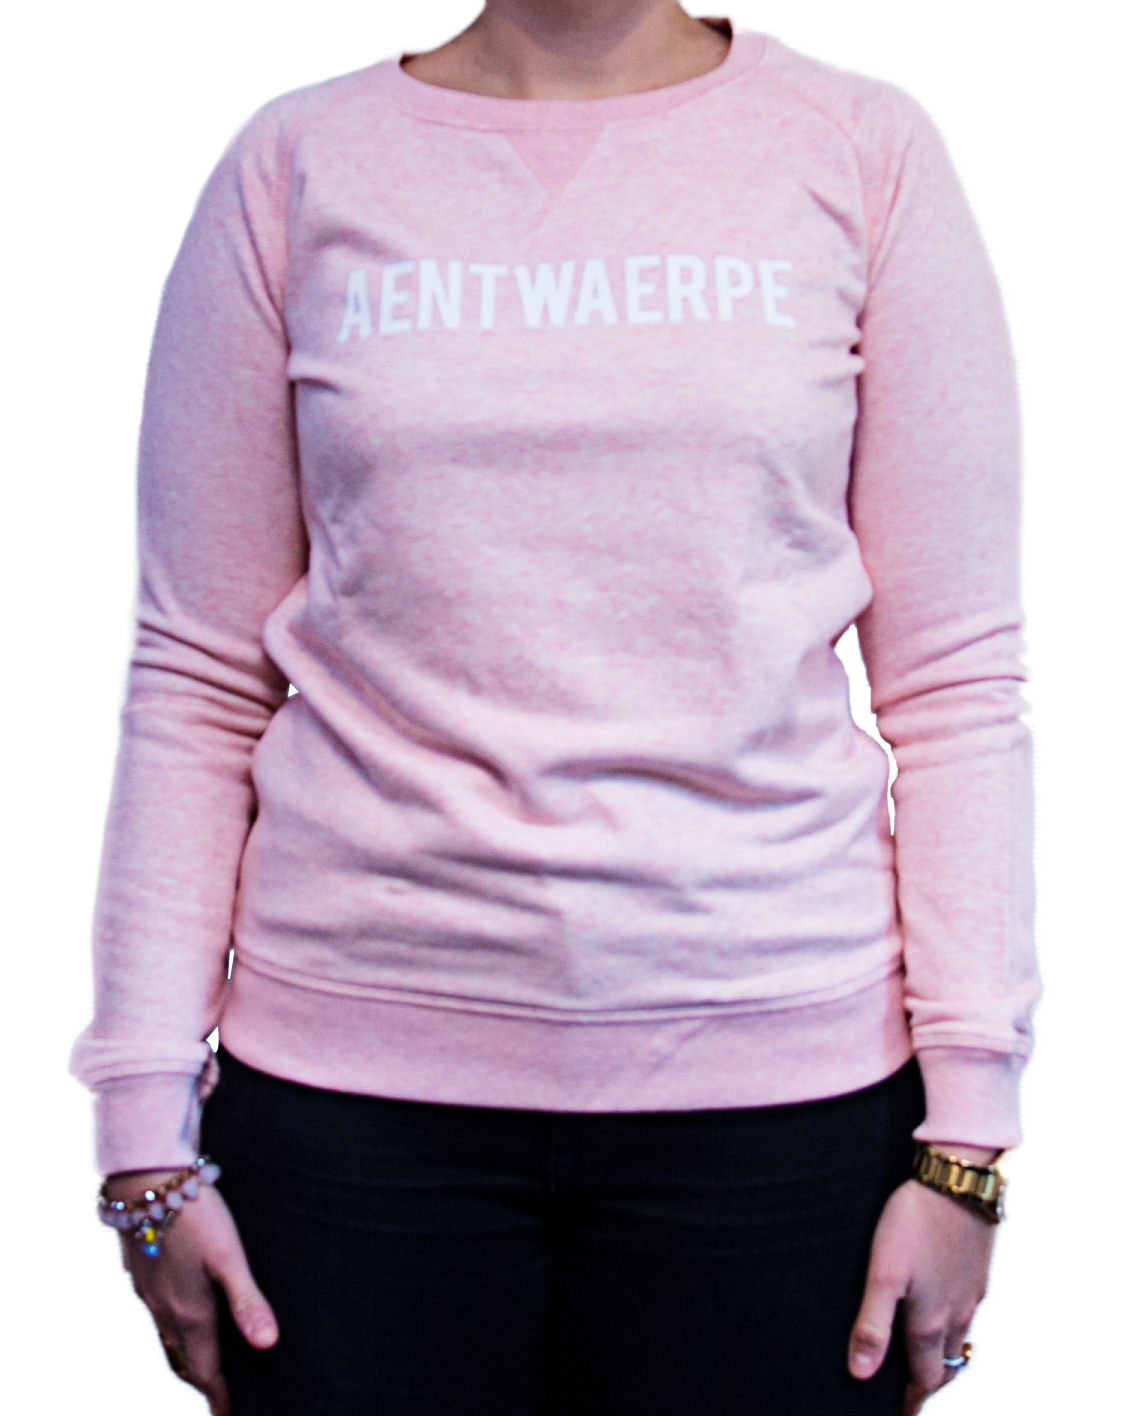 sweater aentwaerpe roze vrouw